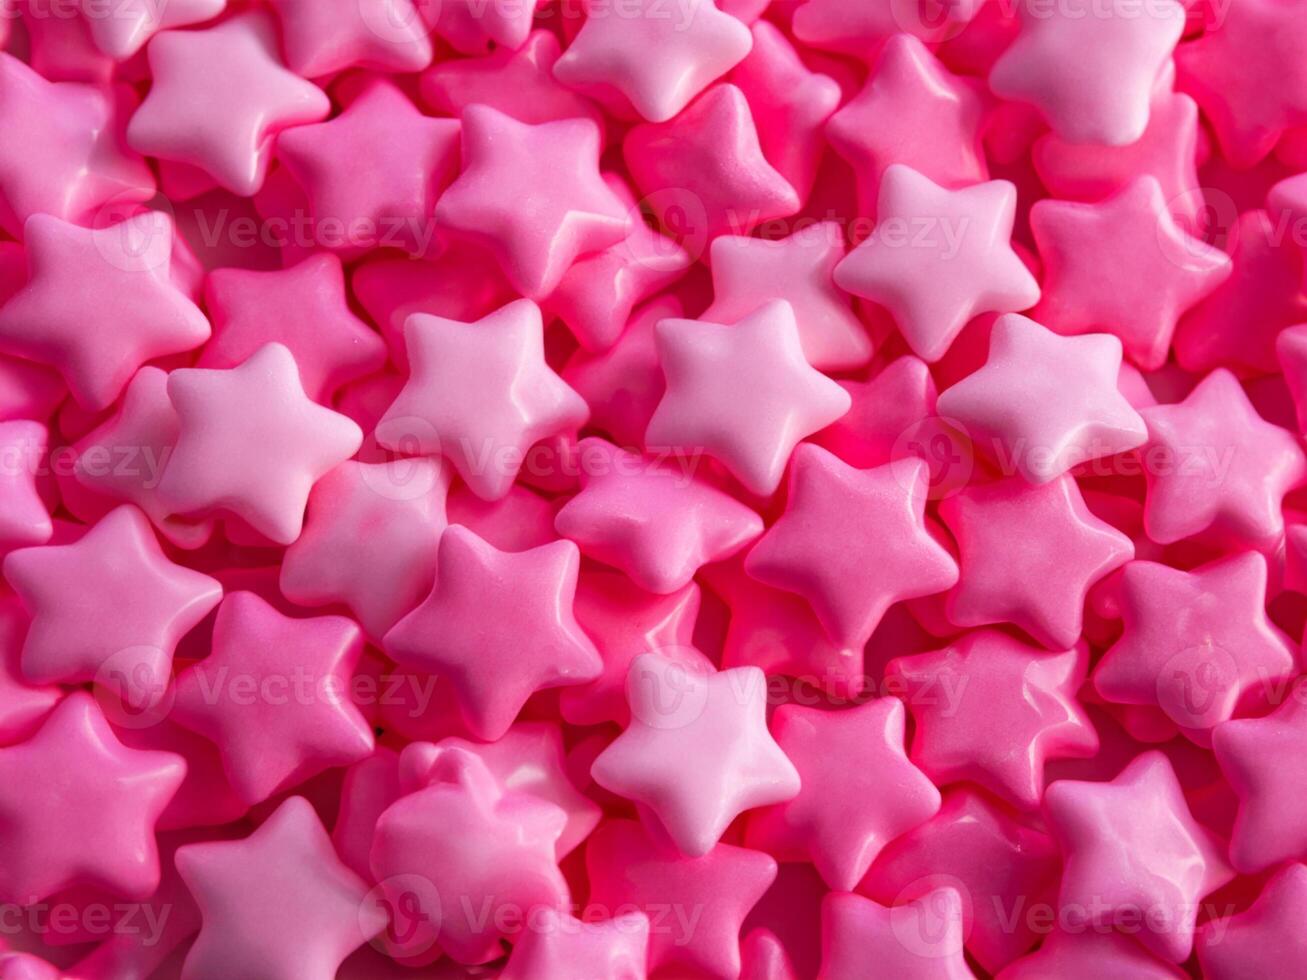 pink stars candies background, close up photo